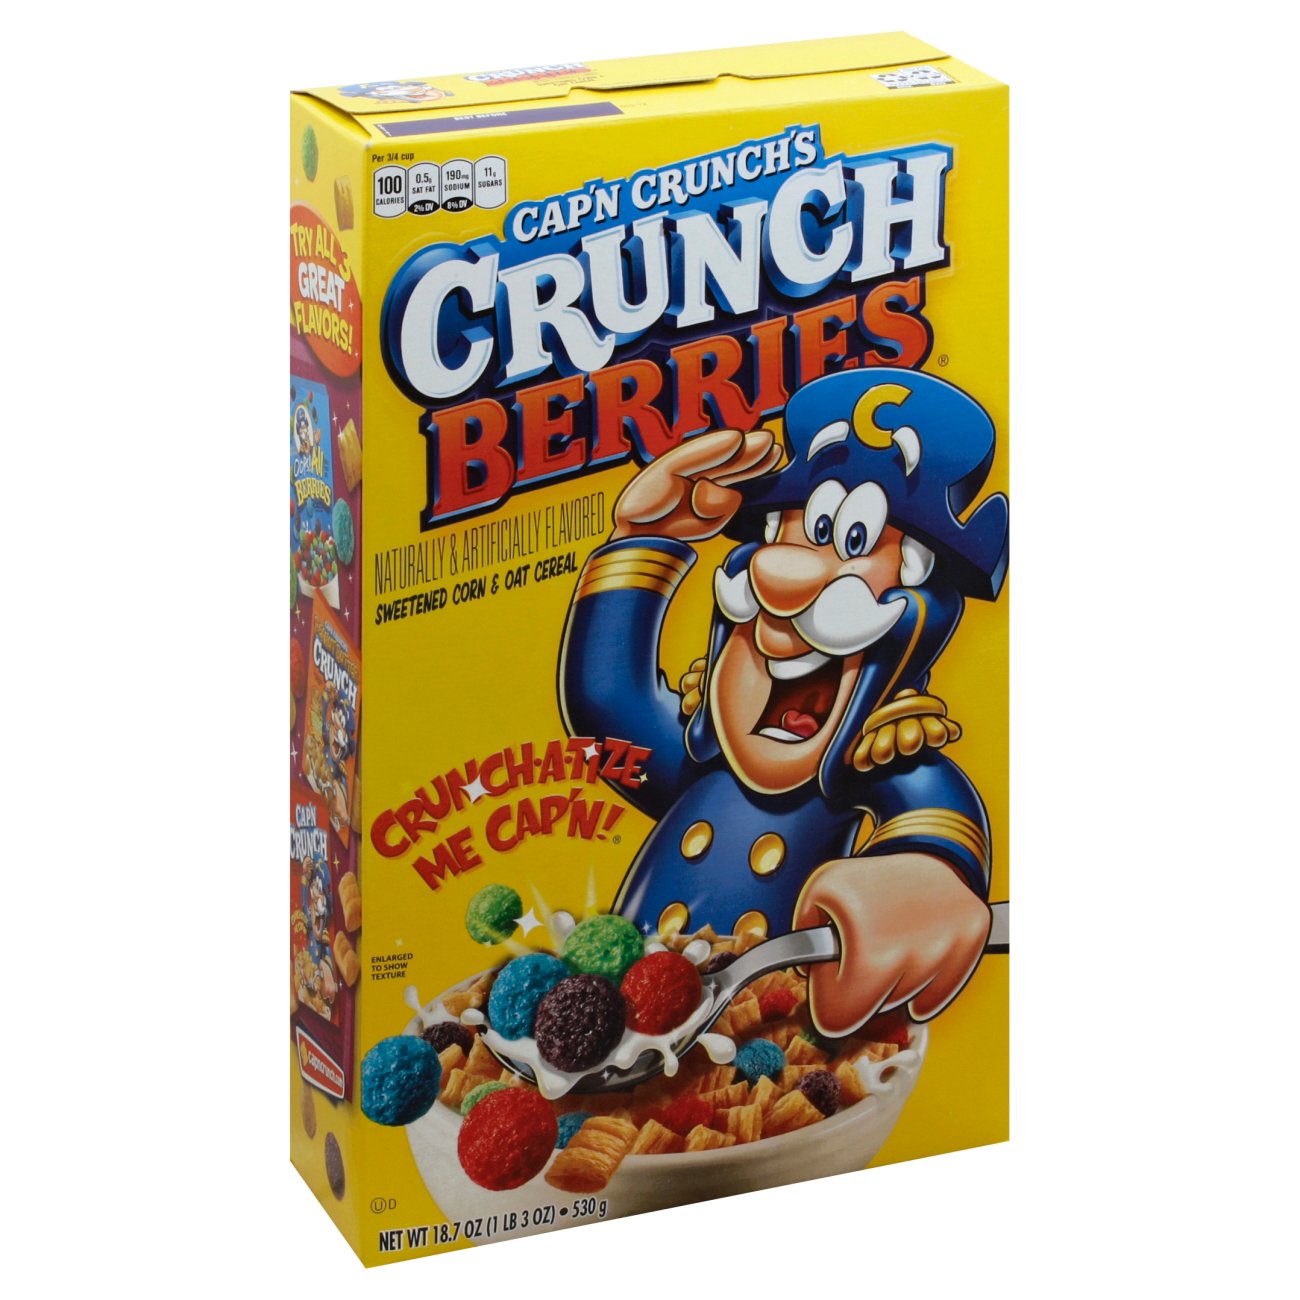 Frivillig Fonetik Sudan Cap'n Crunch Crunch Berries Cereal - Shop Cereal & Breakfast at H-E-B